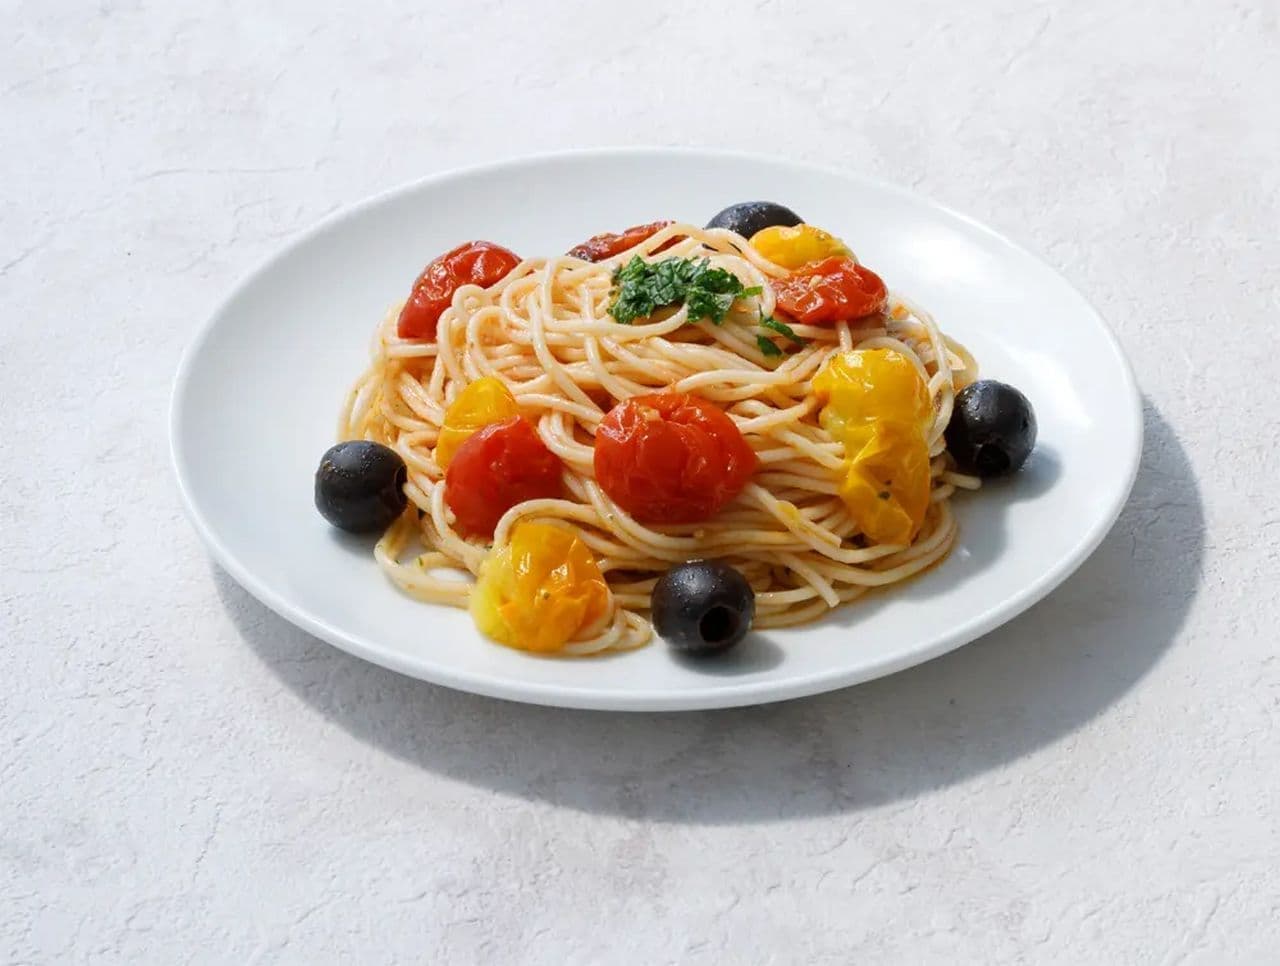 KINOKUNIYA "Cold cappellini with tomato flavor